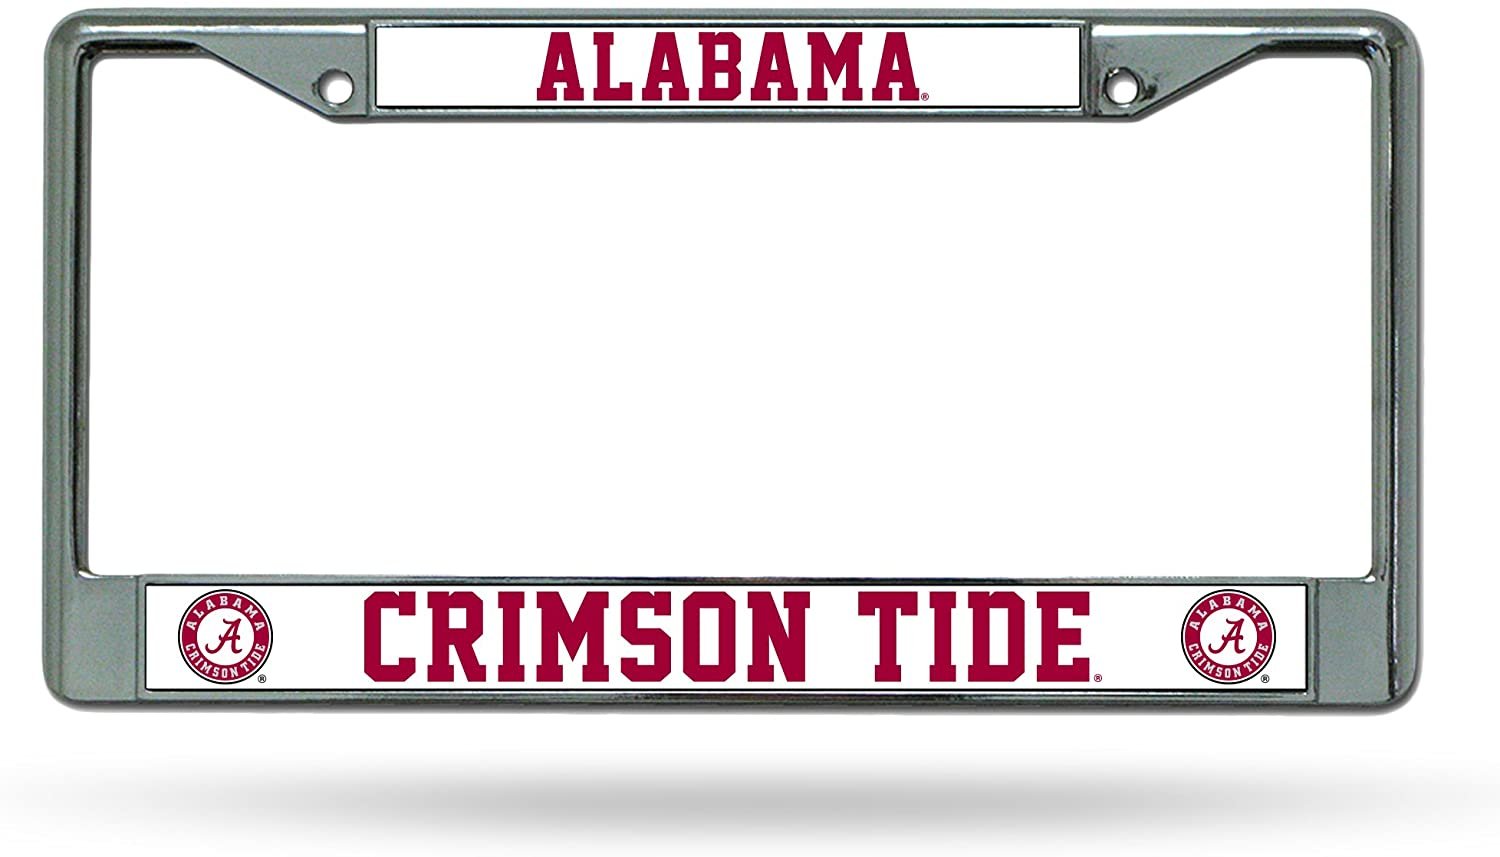 University of Alabama Crimson Tide Premium Metal License Plate Frame Chrome Tag Cover, 12x6 Inch